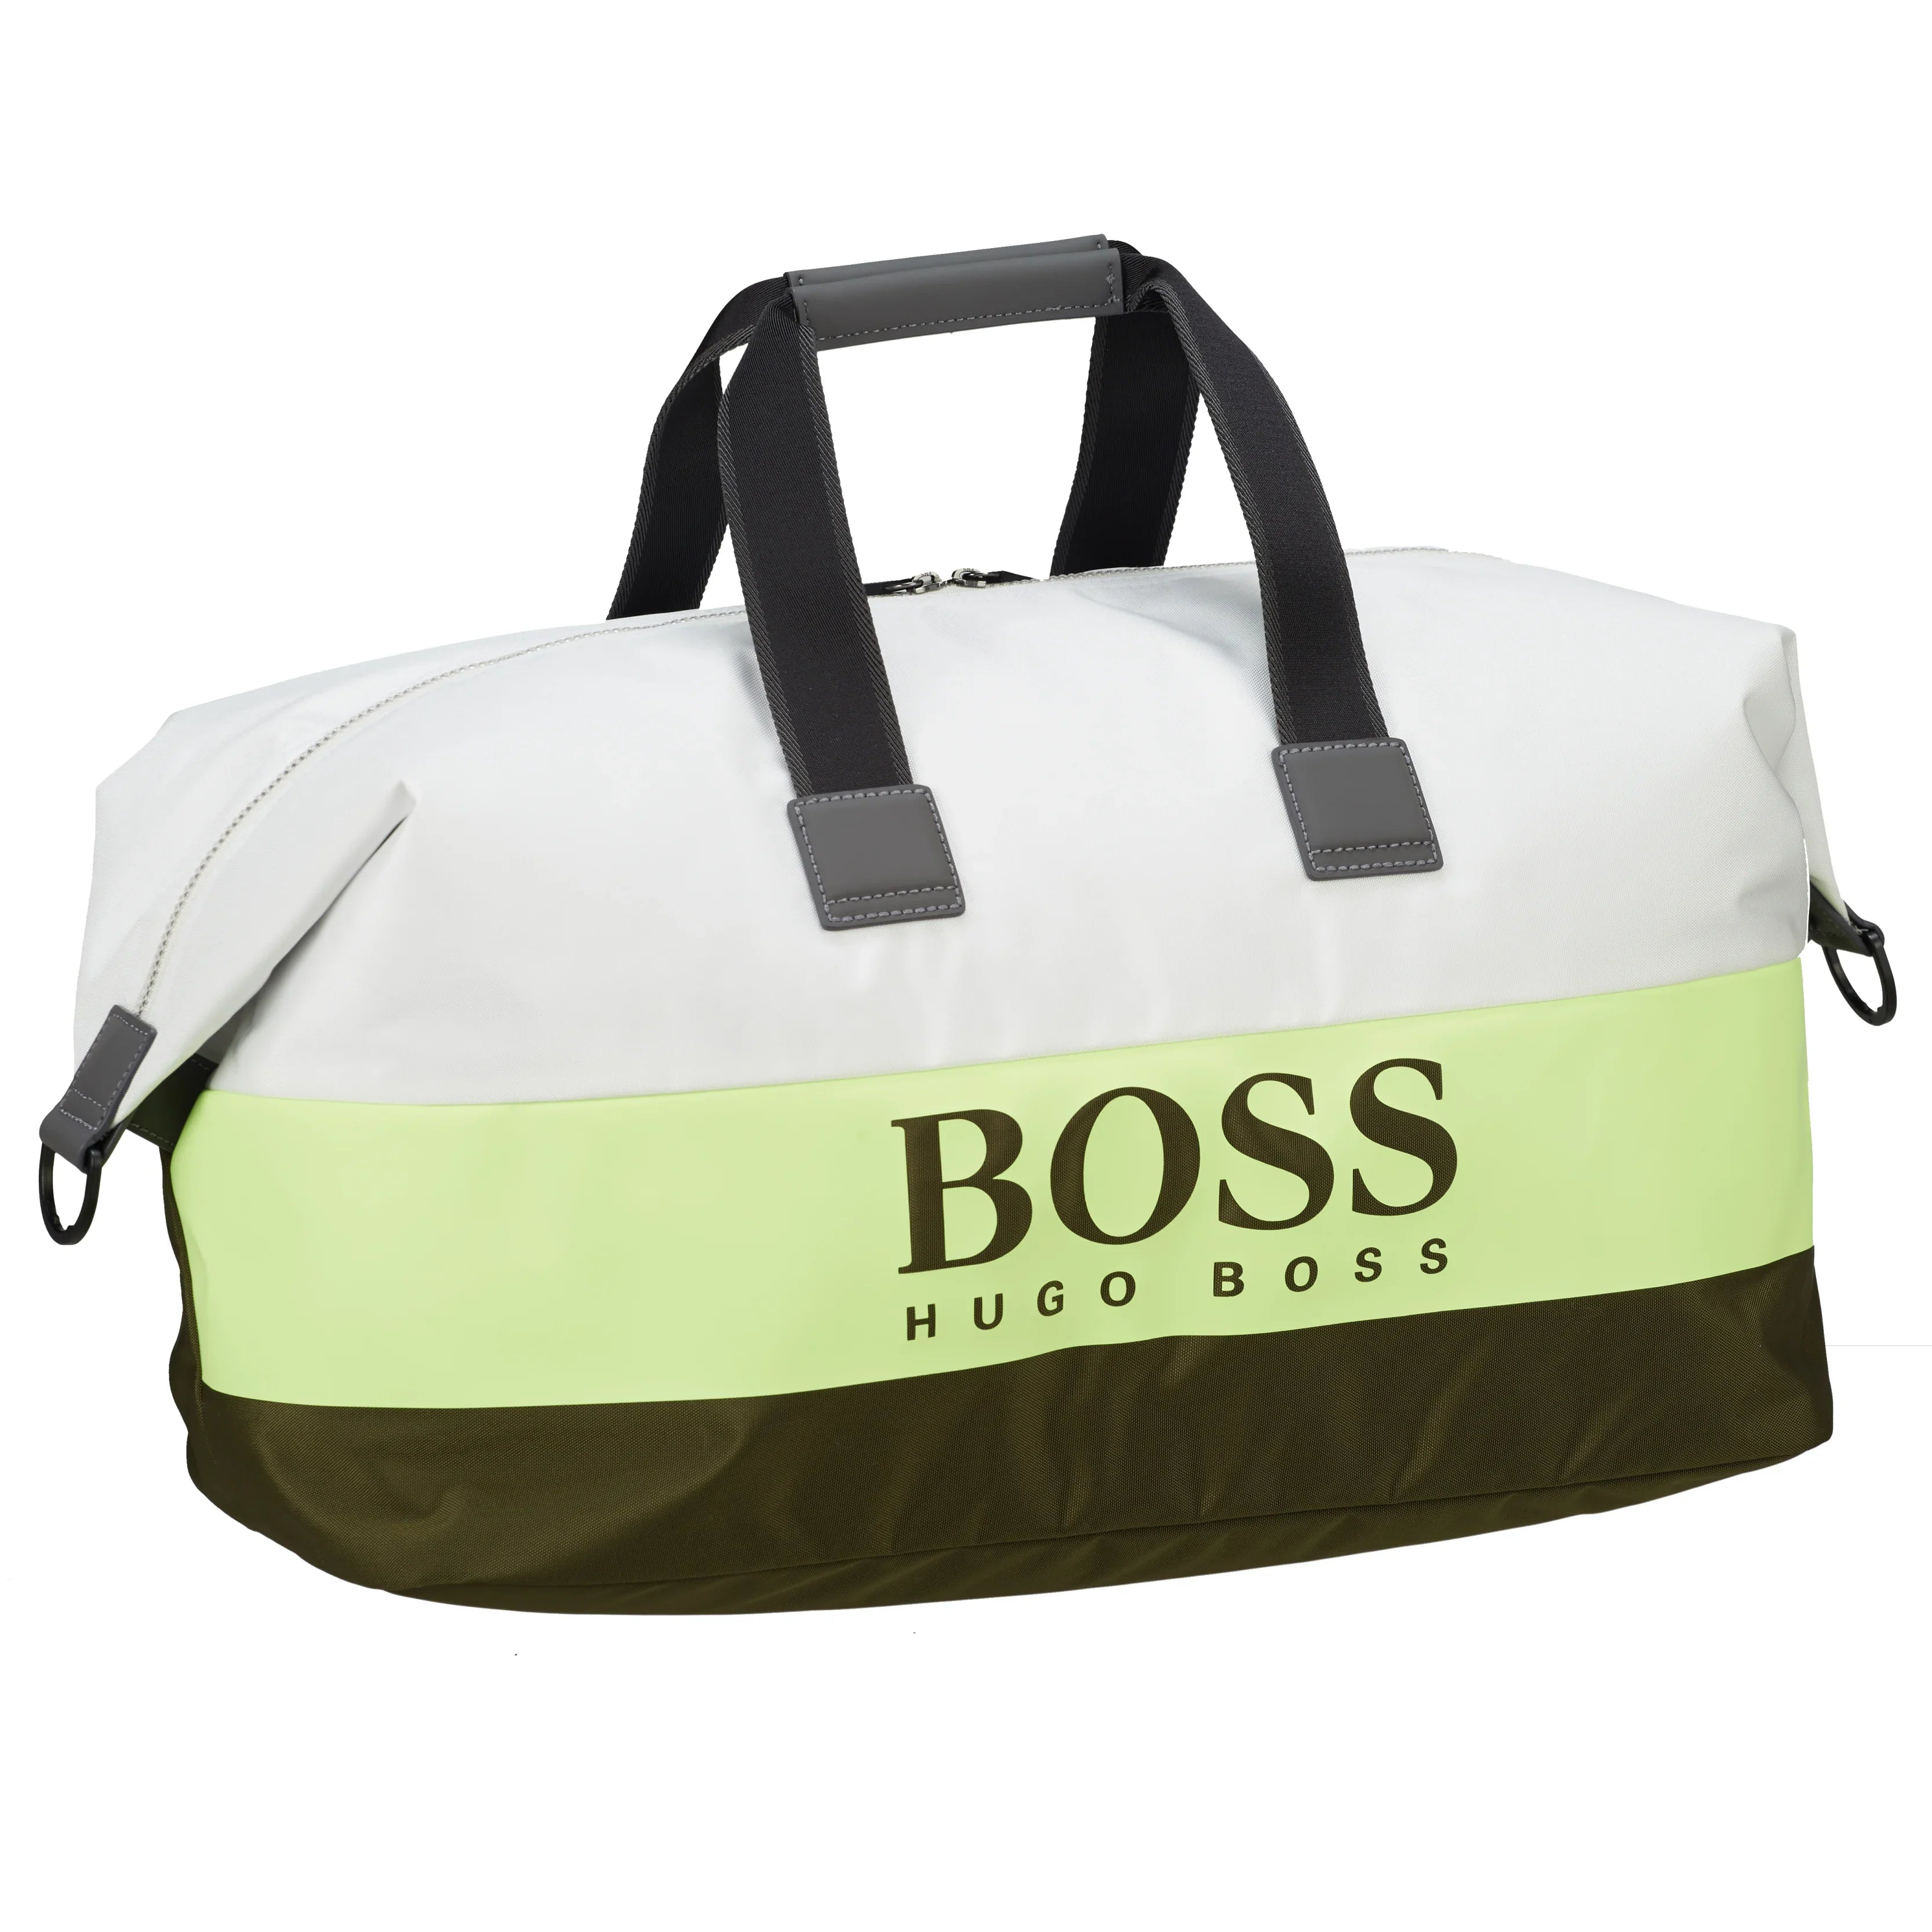 BOSS Pixel ST sac de voyage 52 cm - blanc vert